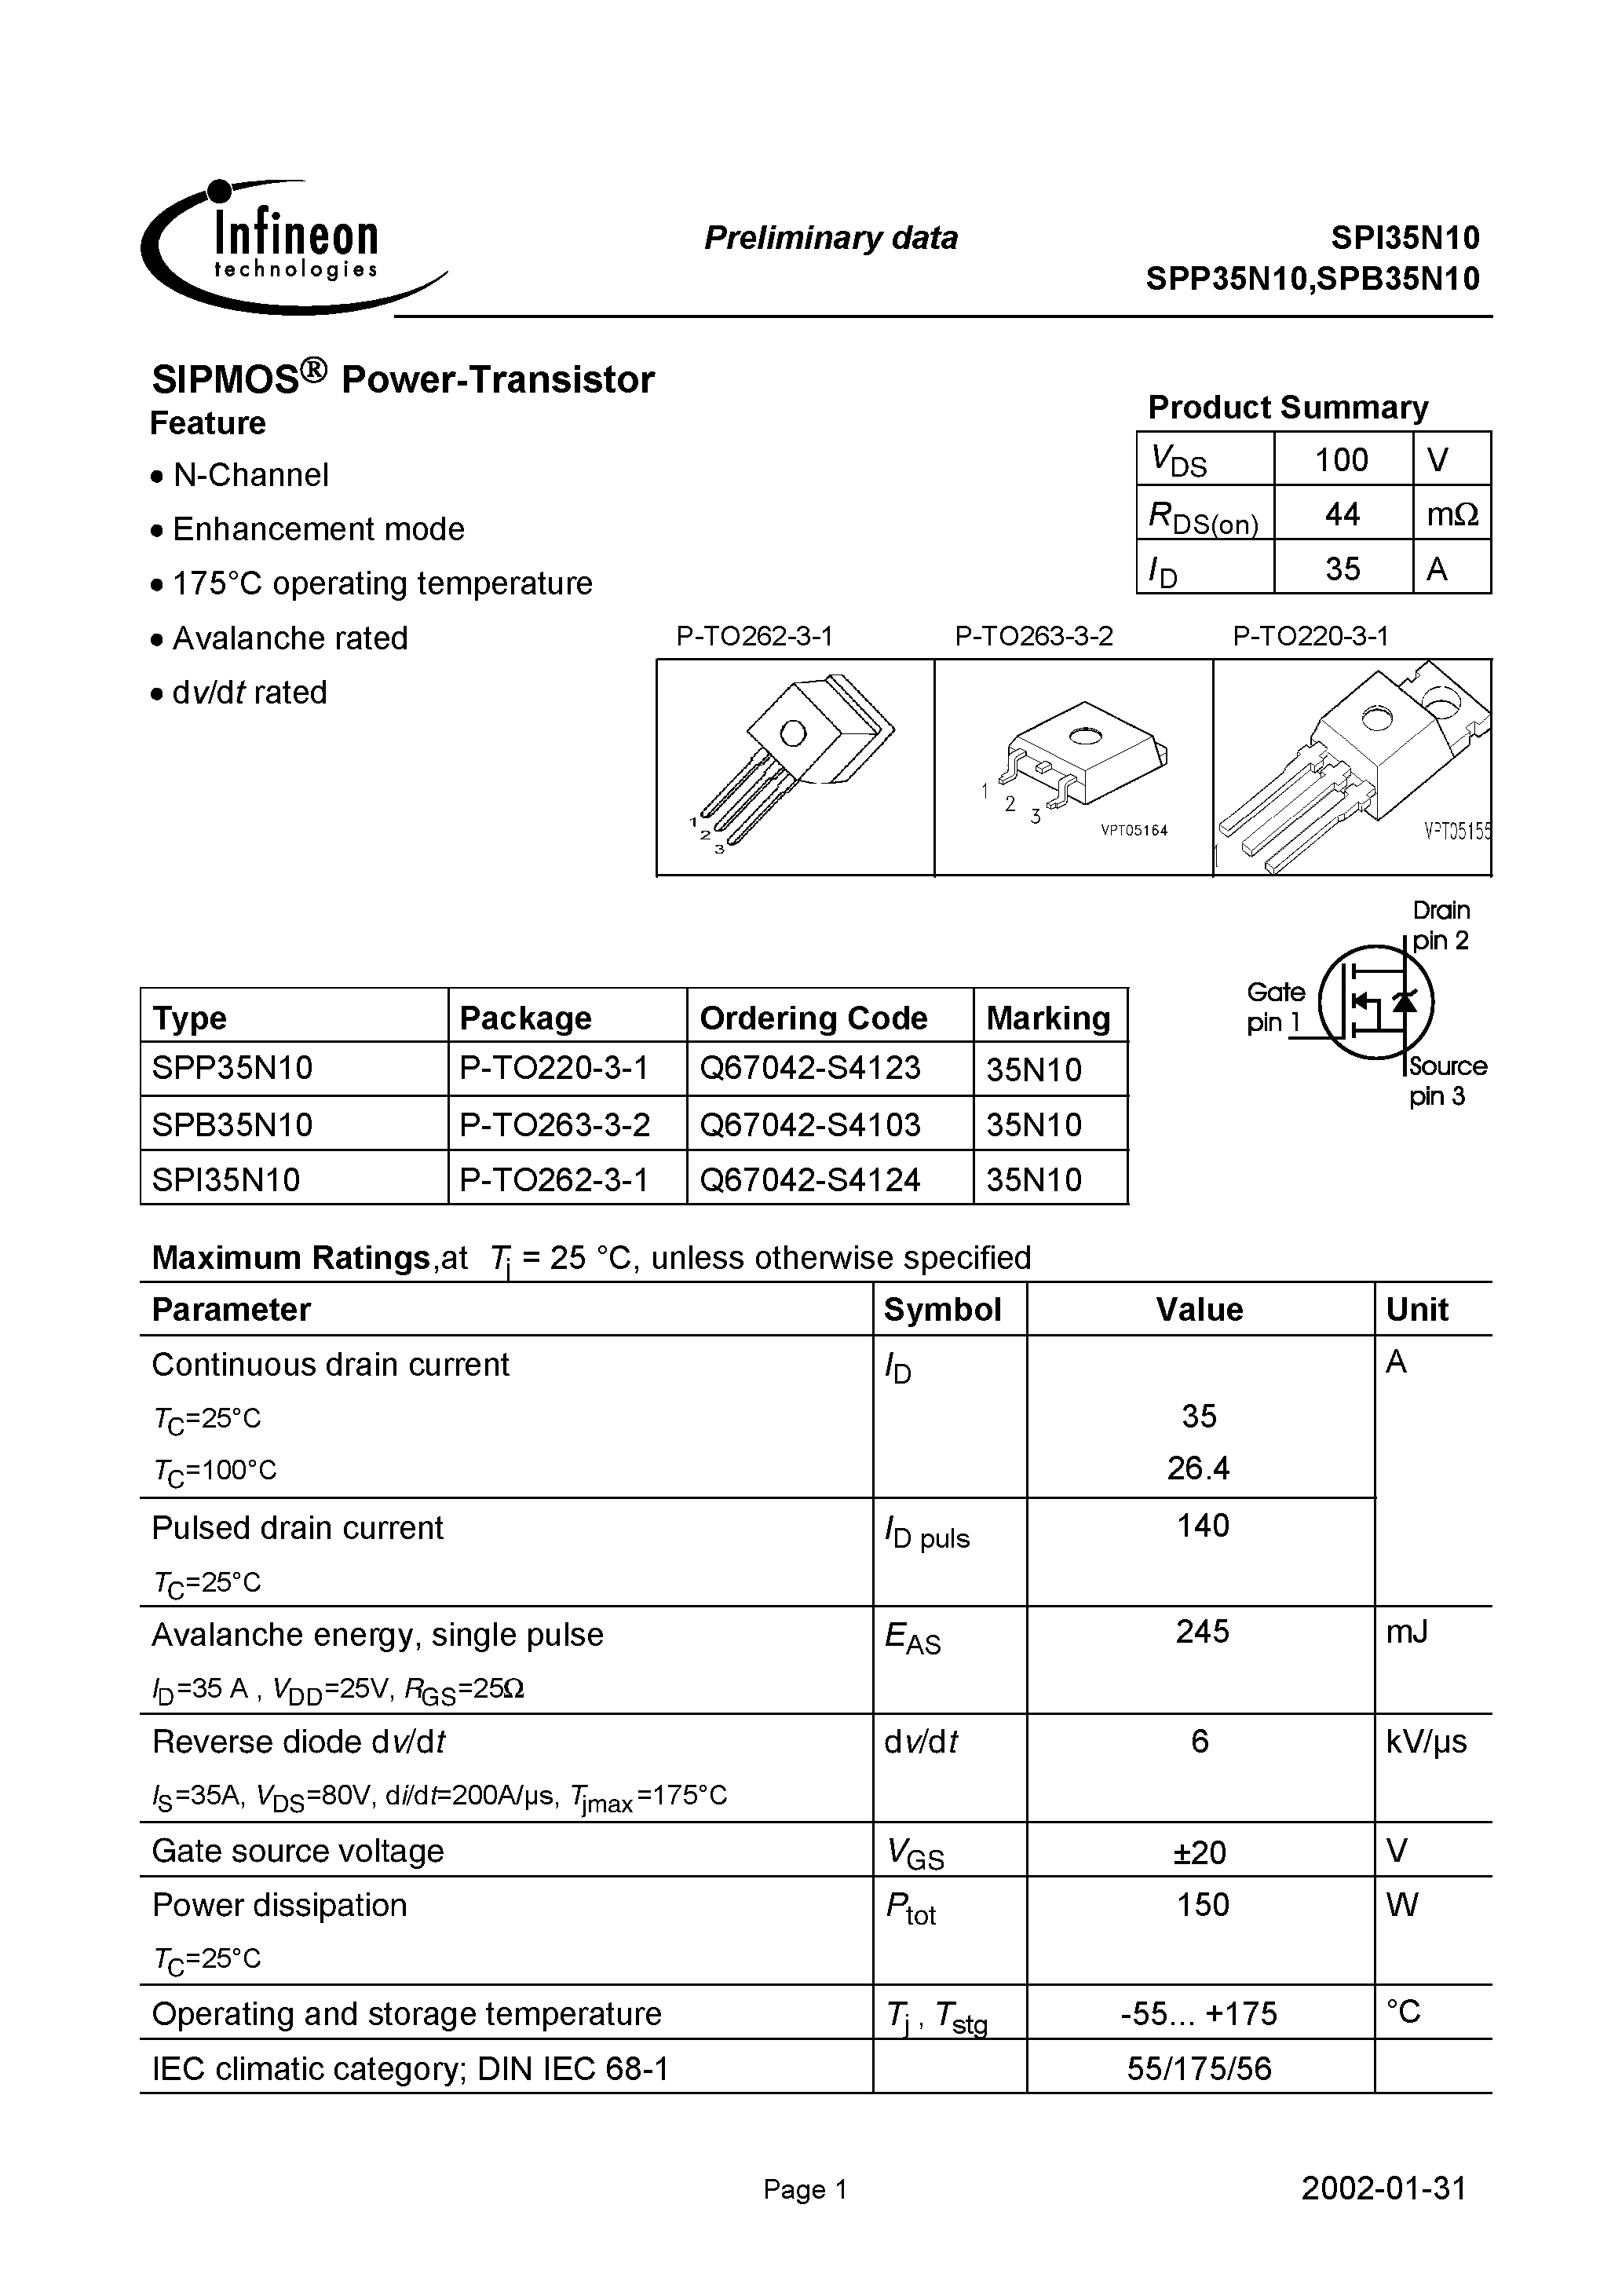 Даташит SPI35N10 - SIPMOS Power-Transistor страница 1